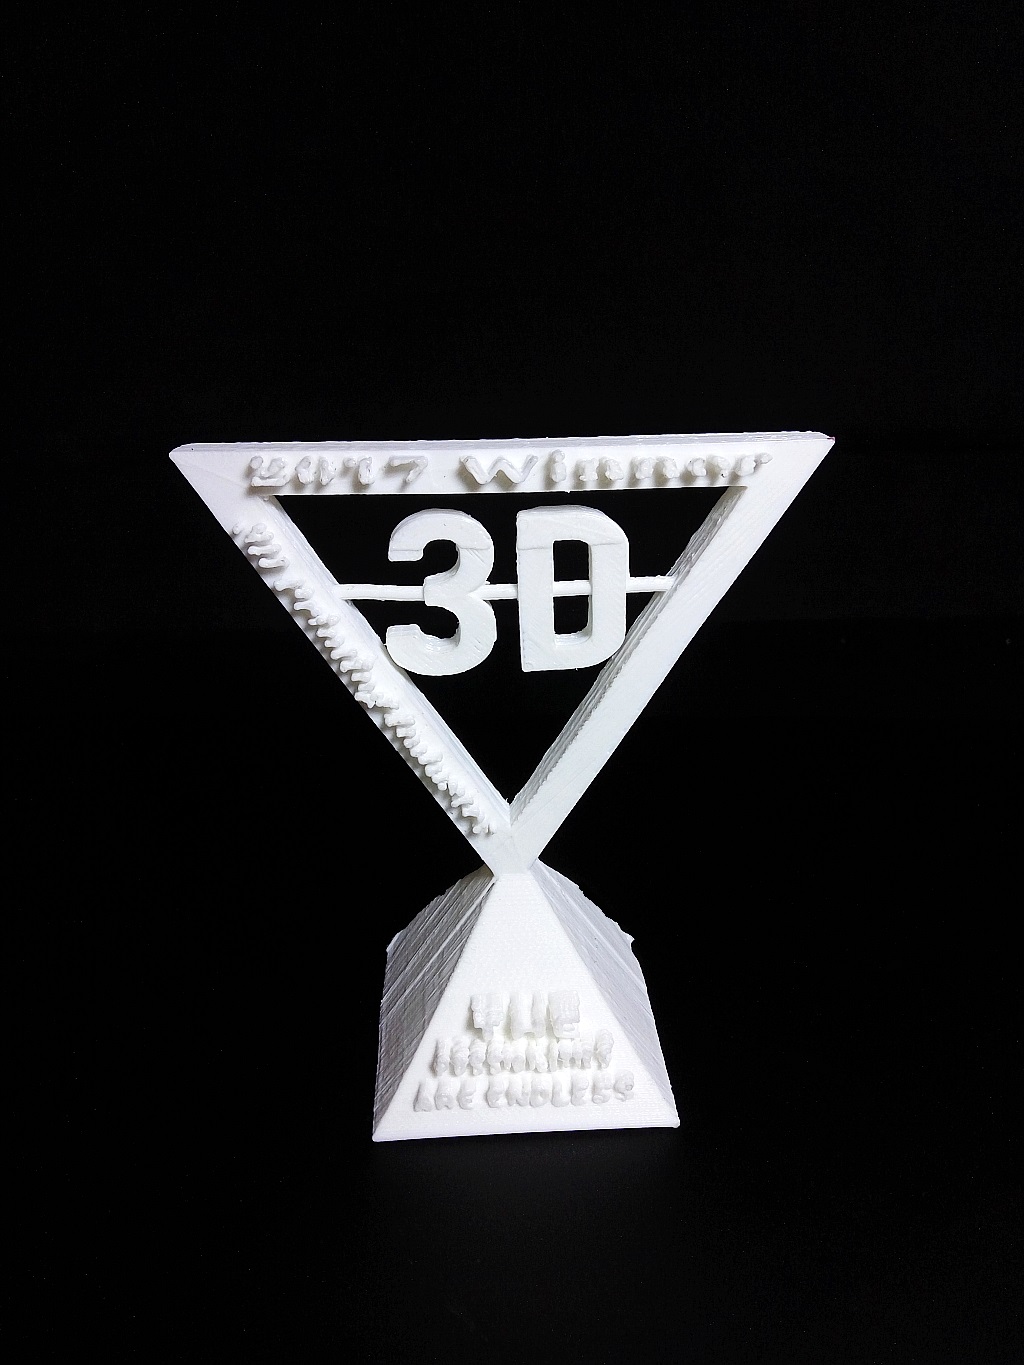 3d Printing Industry Trophy